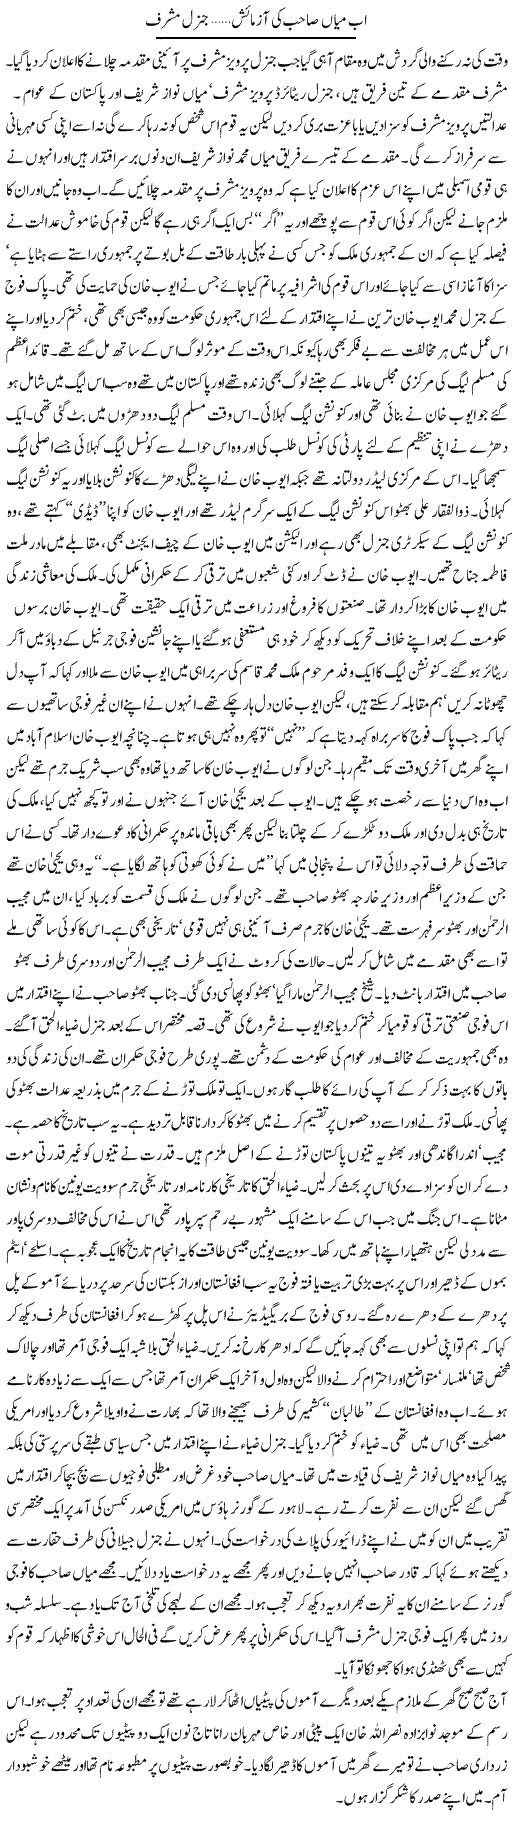 Ab Mian Sahab Ki Farmaish, General Musharrraf | Abdul Qadir Hassan | Daily Urdu Columns